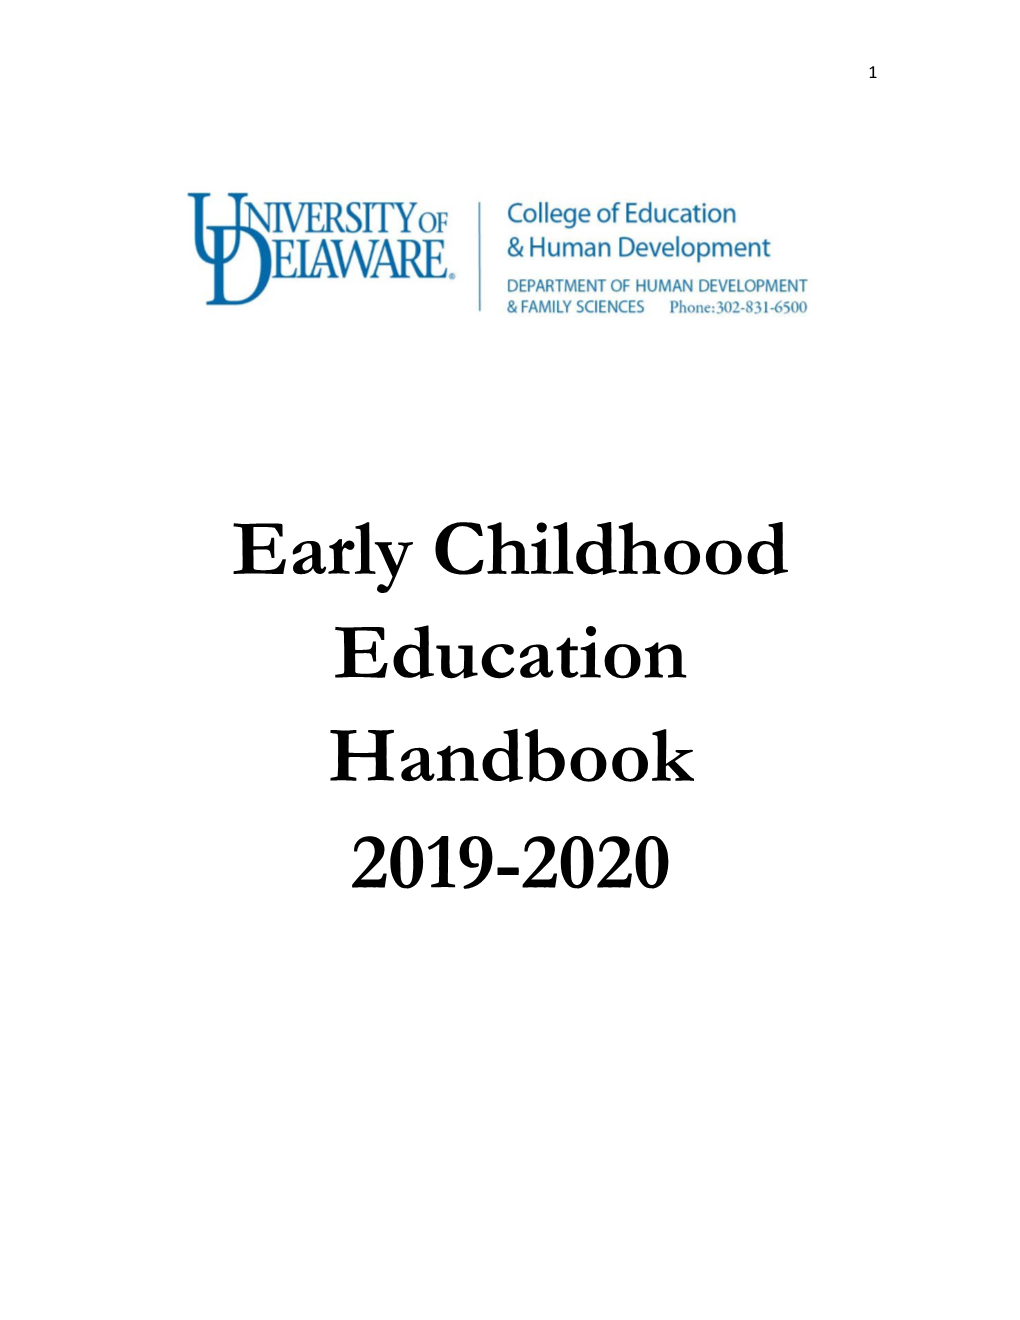 Early Childhood Education Handbook 2019-2020 2